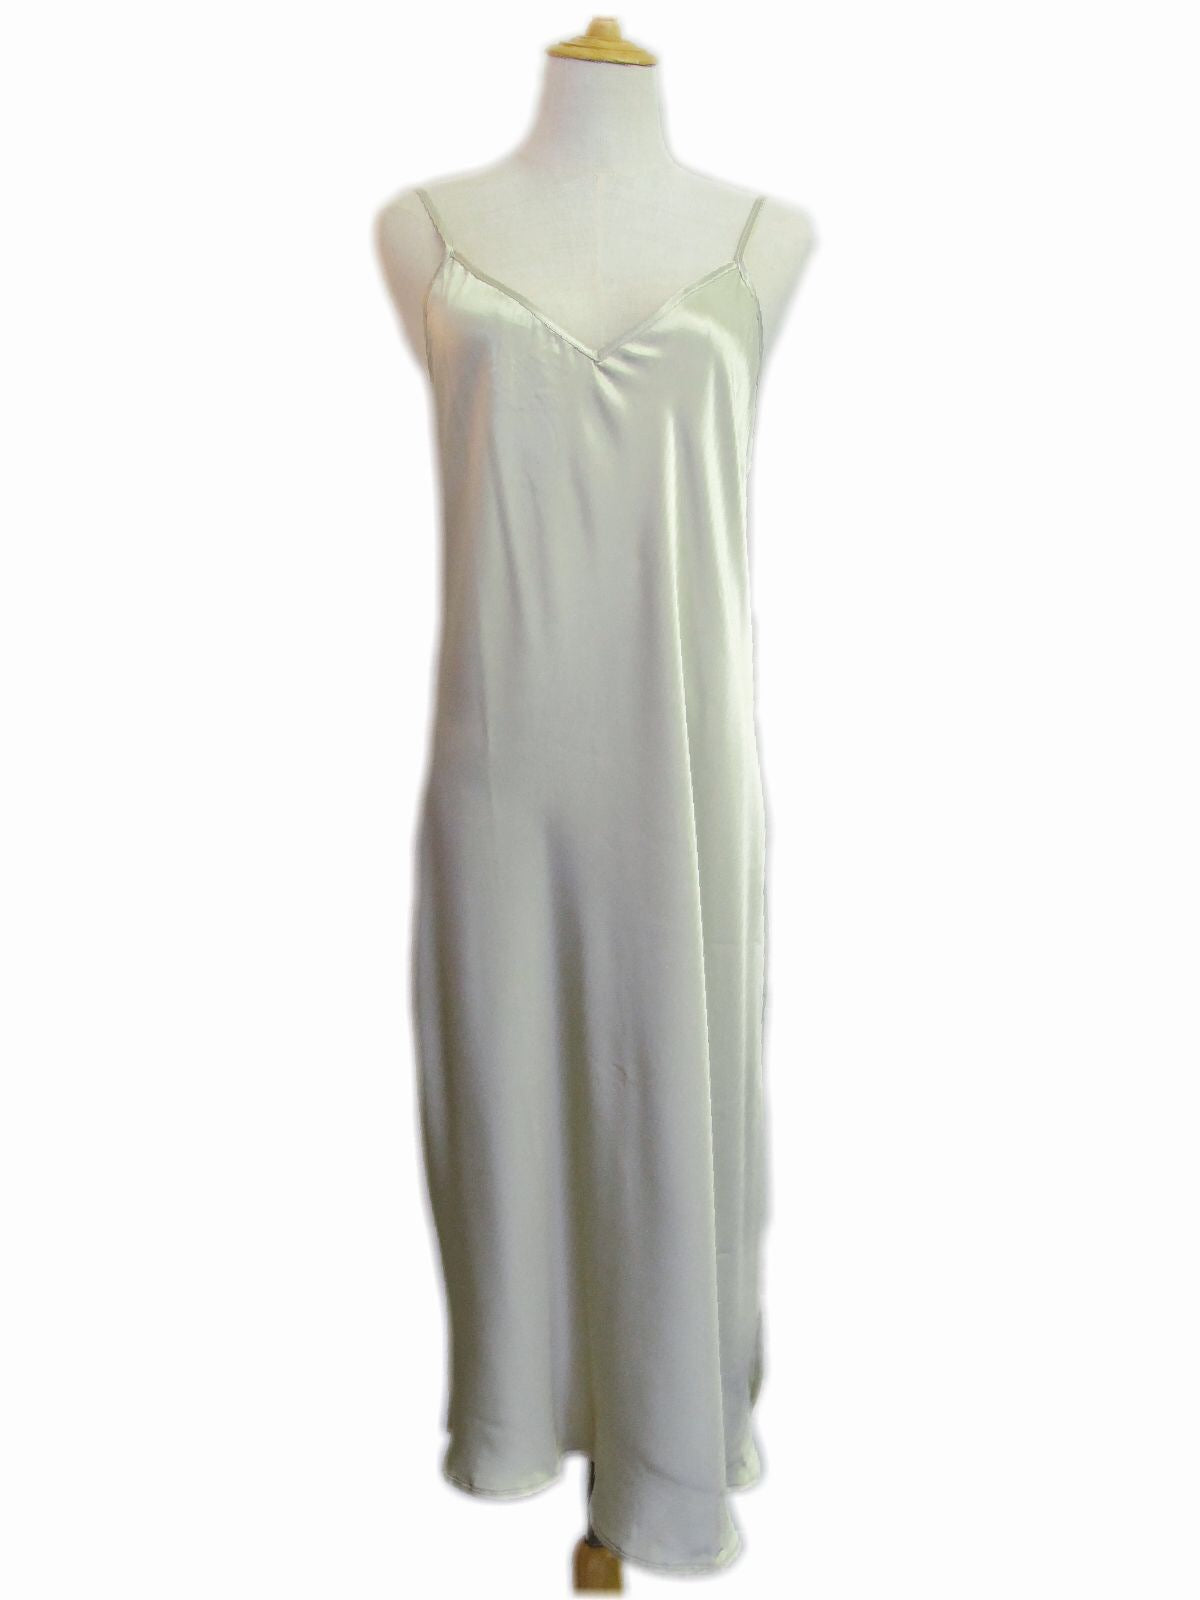 Shoe String Slip Nightdress - White, [product type], Lullaby New Zealand